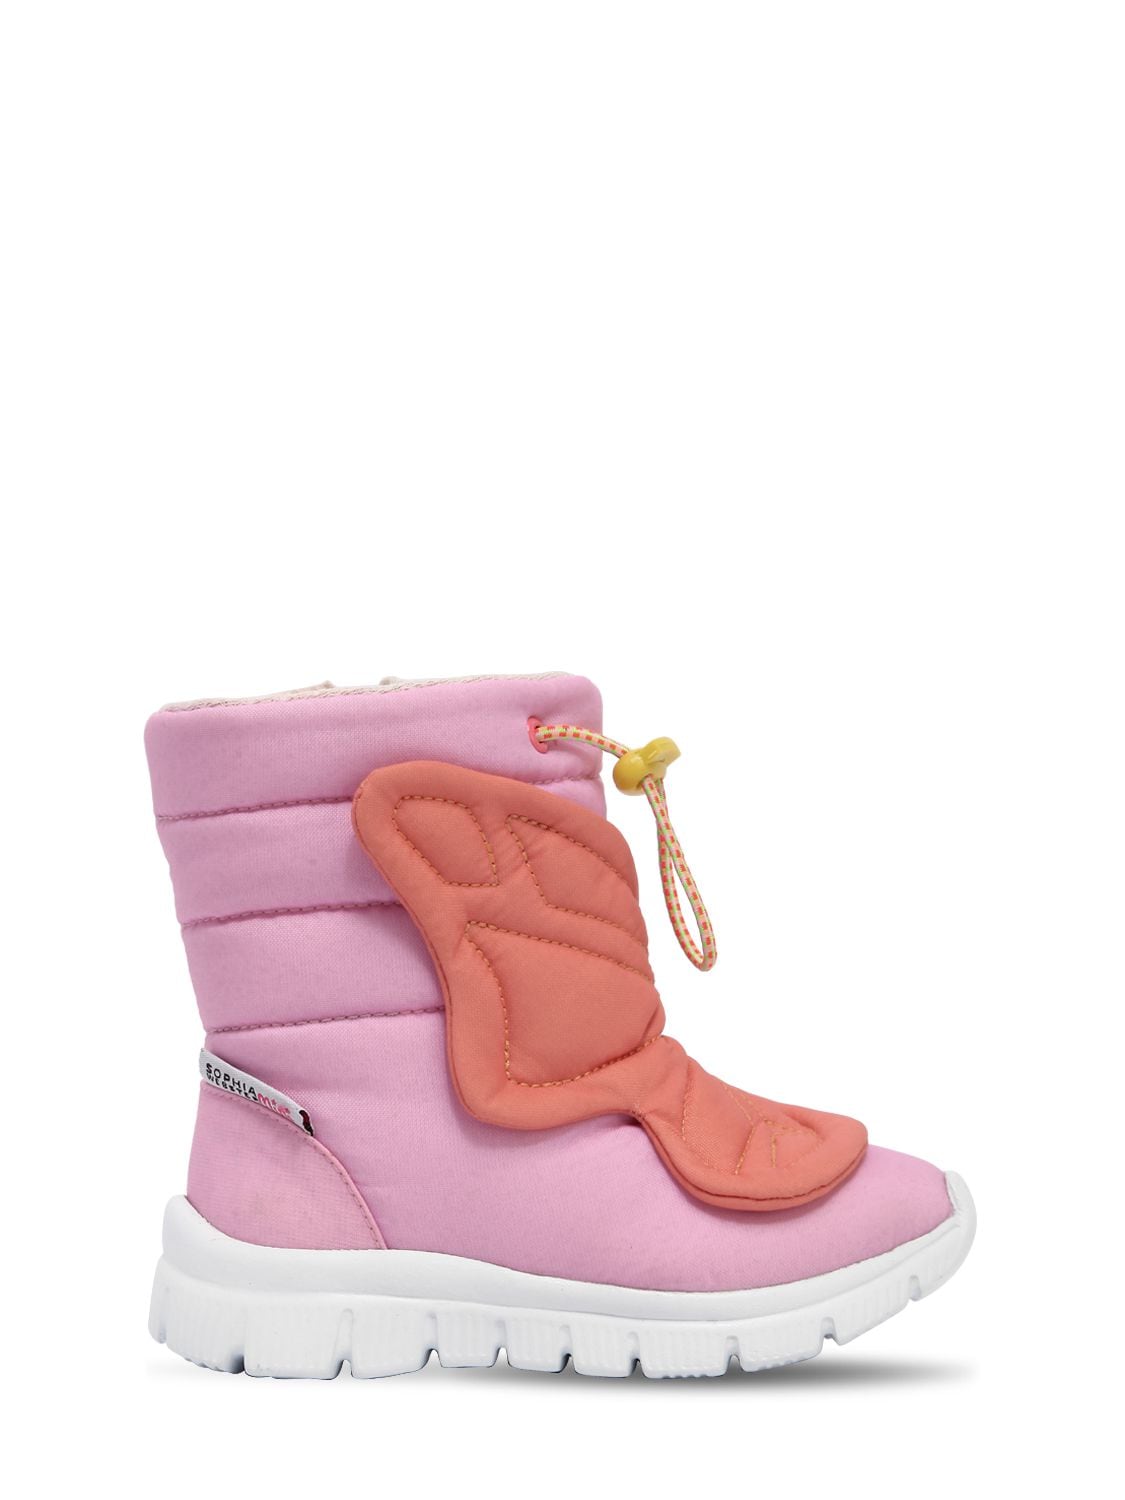 Sophia Webster Kids' Nevah Nylon Snow Boots In Pink